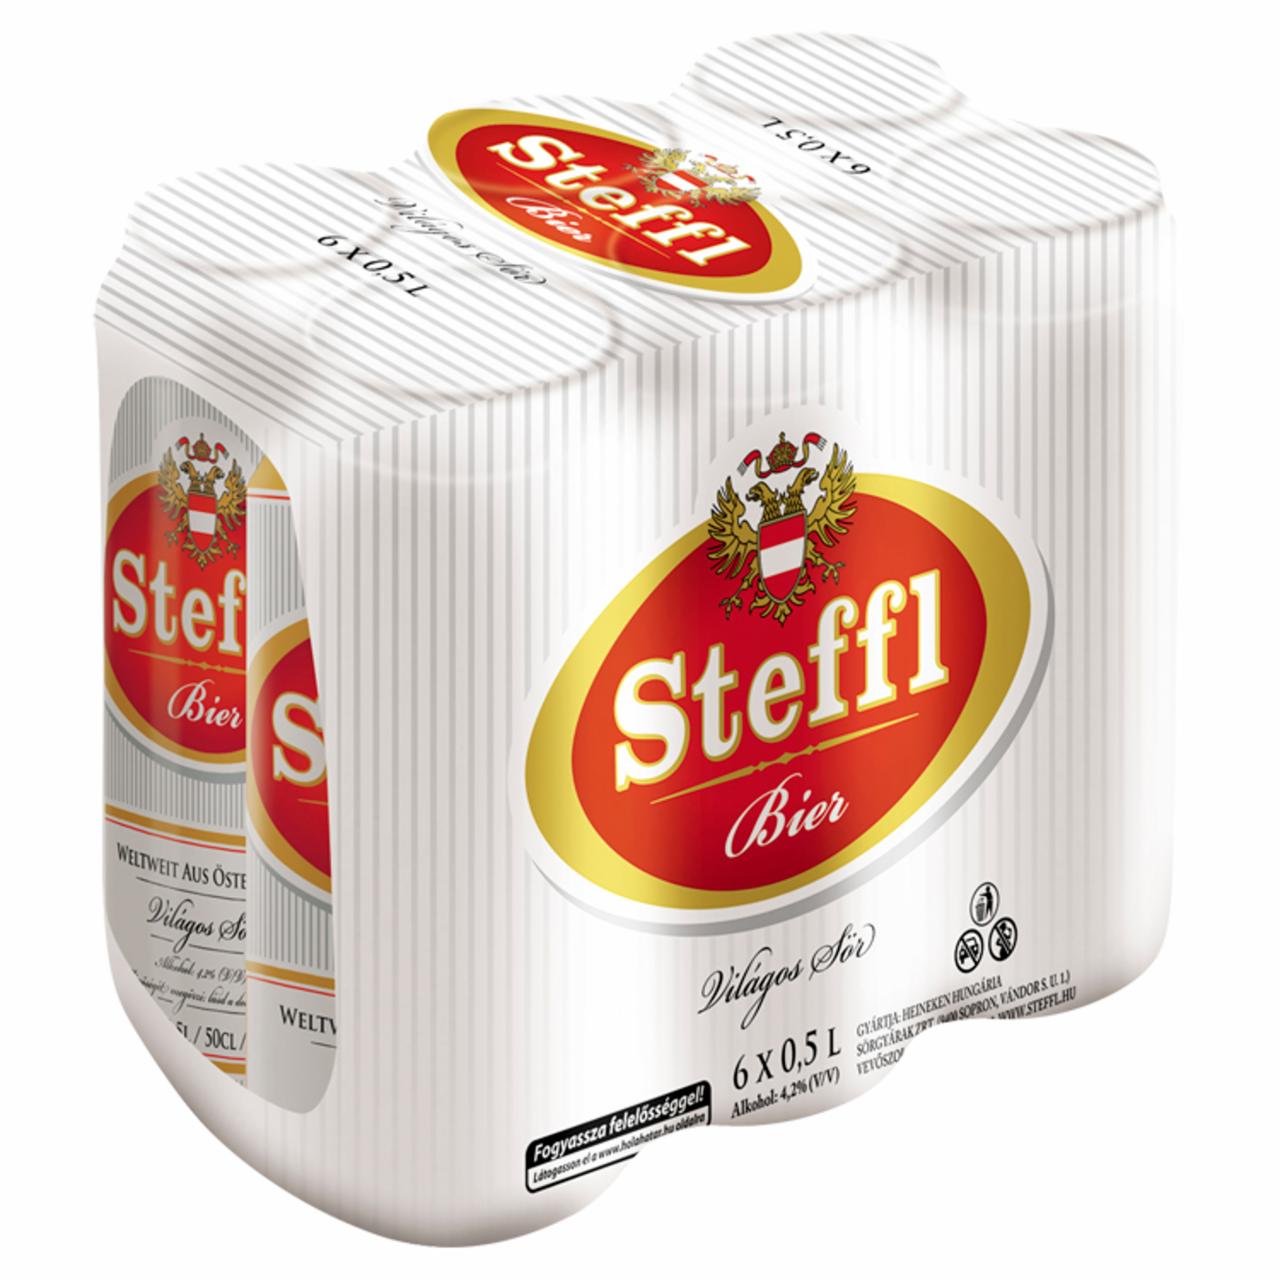 Képek - Steffl világos sör 4,2% 6 x 0,5 l doboz